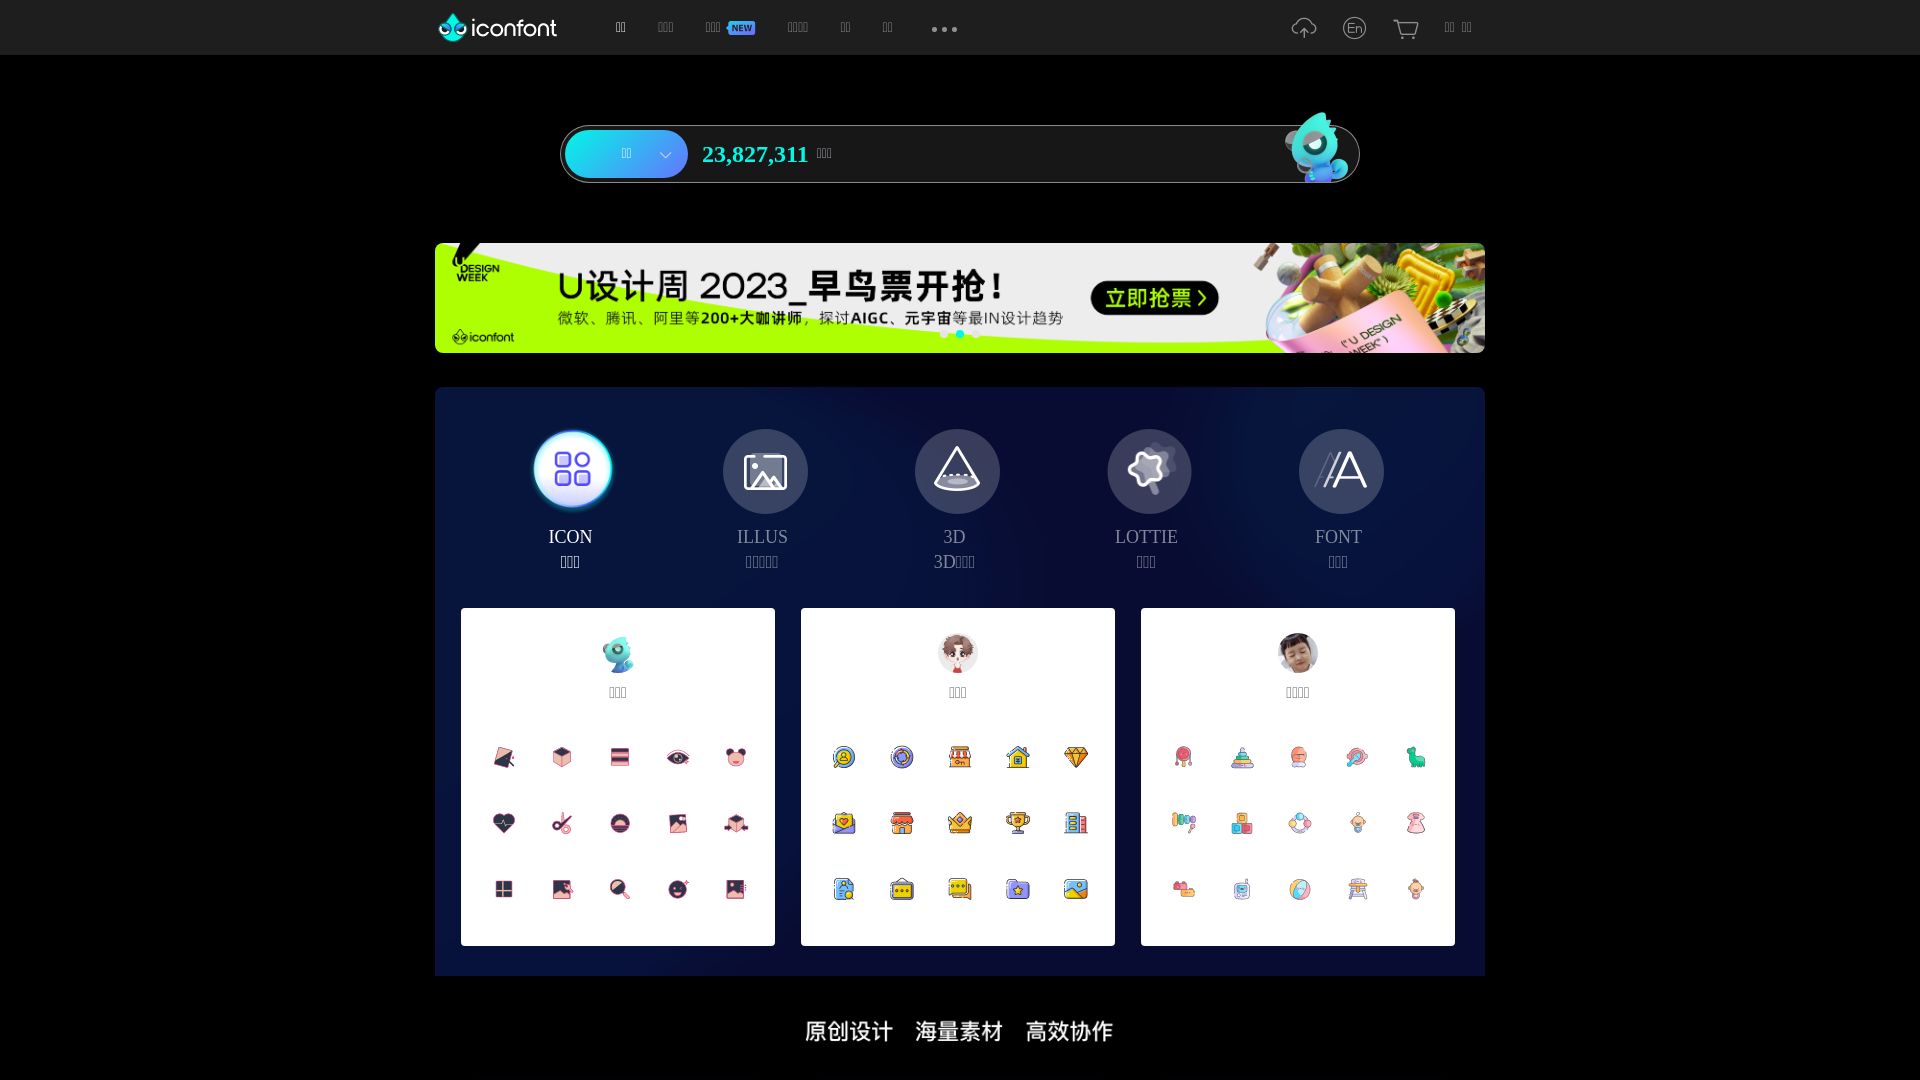 Website status iconfont.cn is   ONLINE